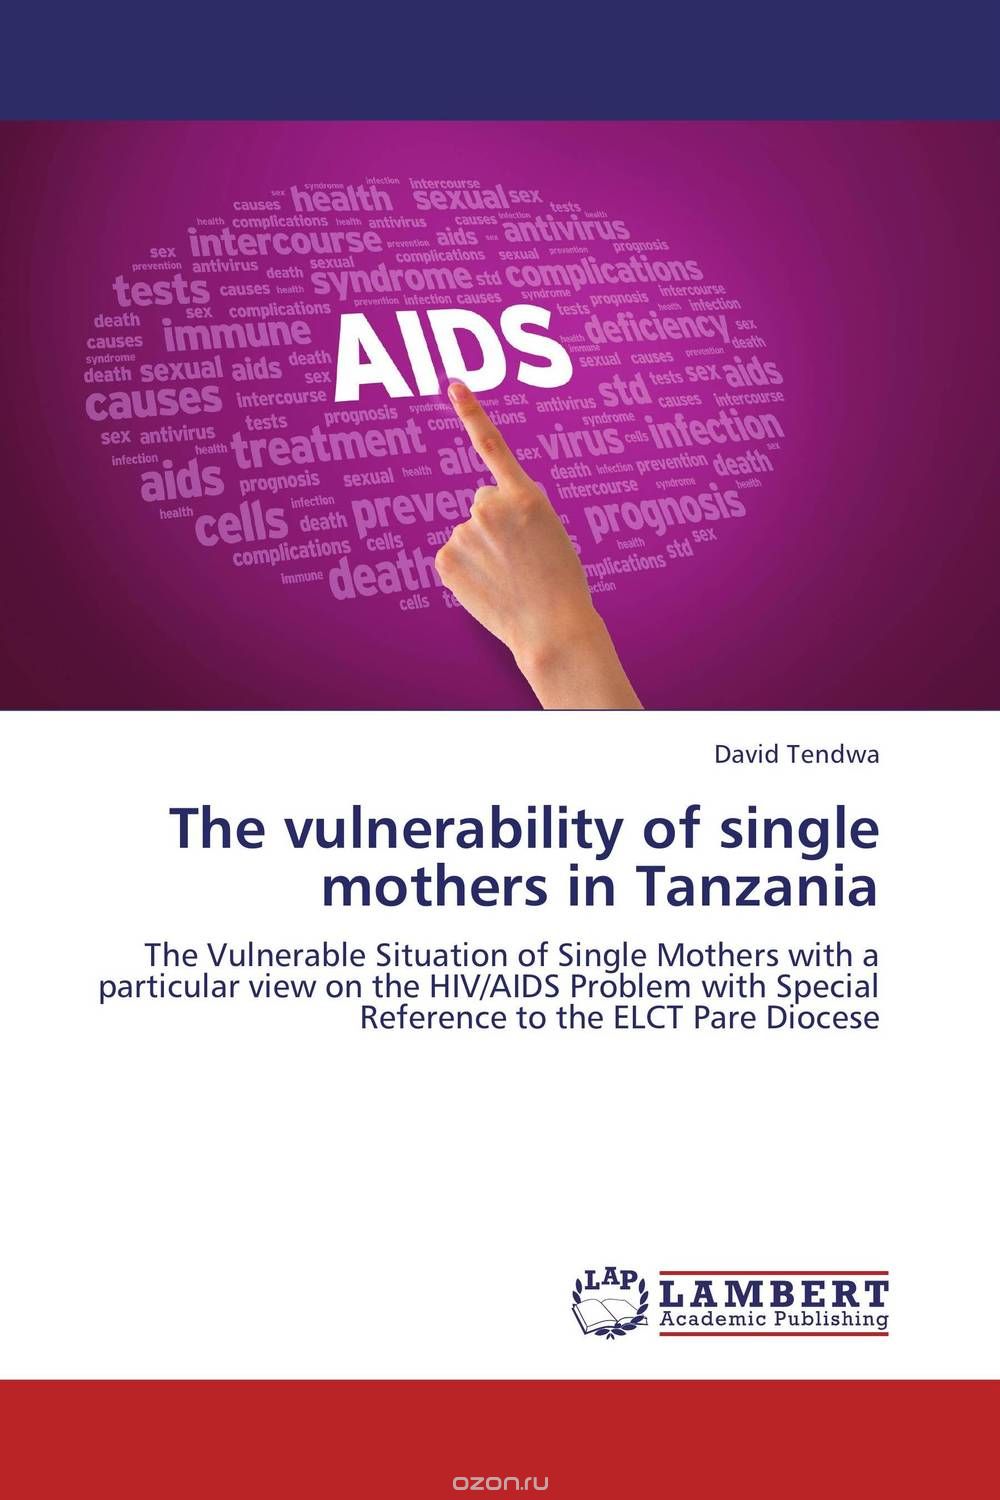 Скачать книгу "The vulnerability of single mothers in Tanzania"